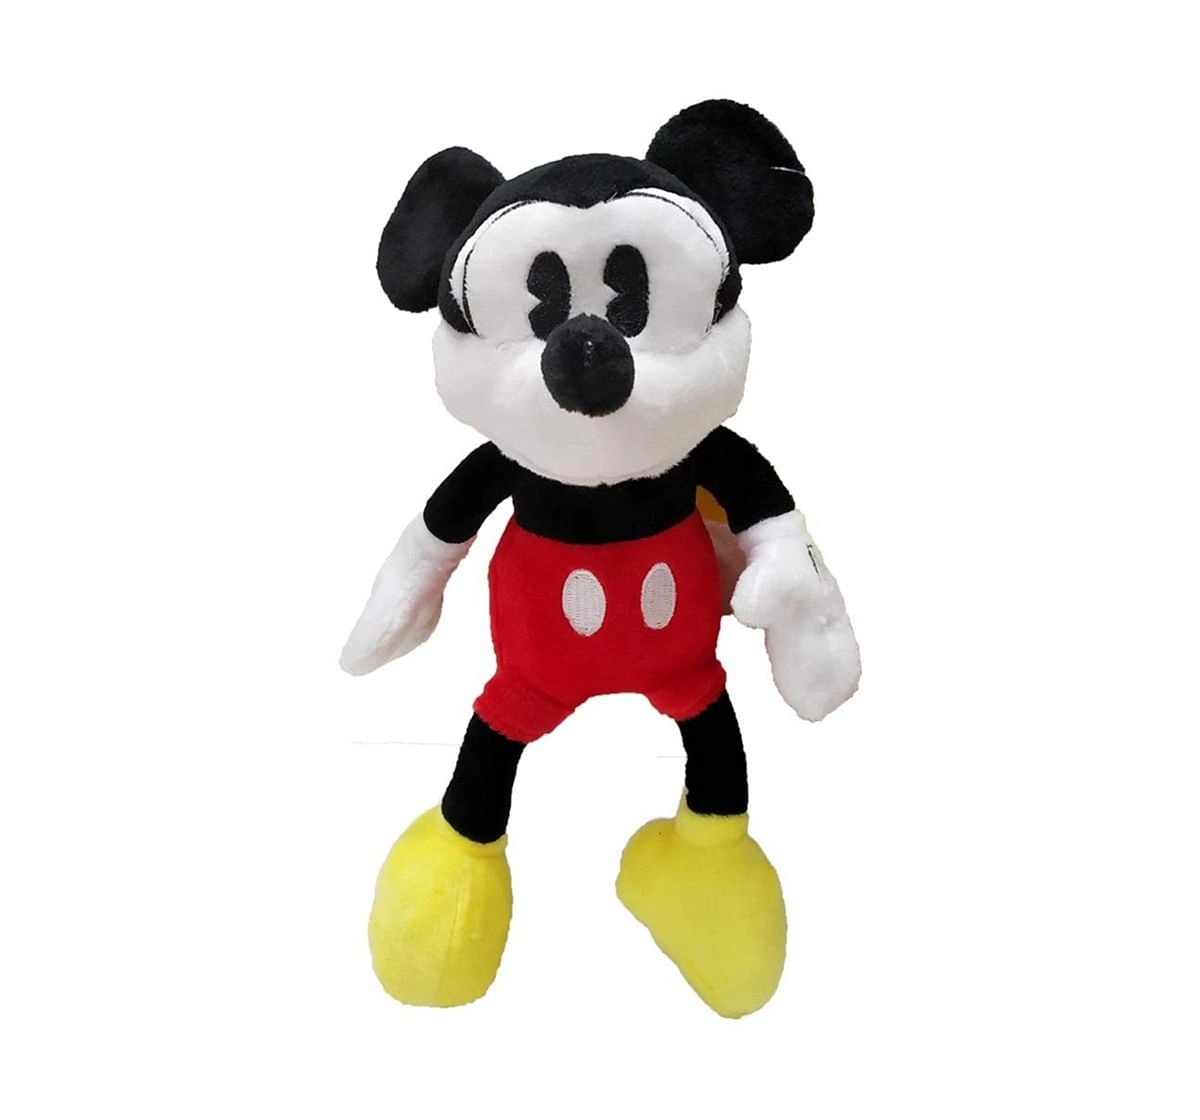 Disney Pie-Eyed Mickey 15 Cm Soft Toy for Kids age 1Y+